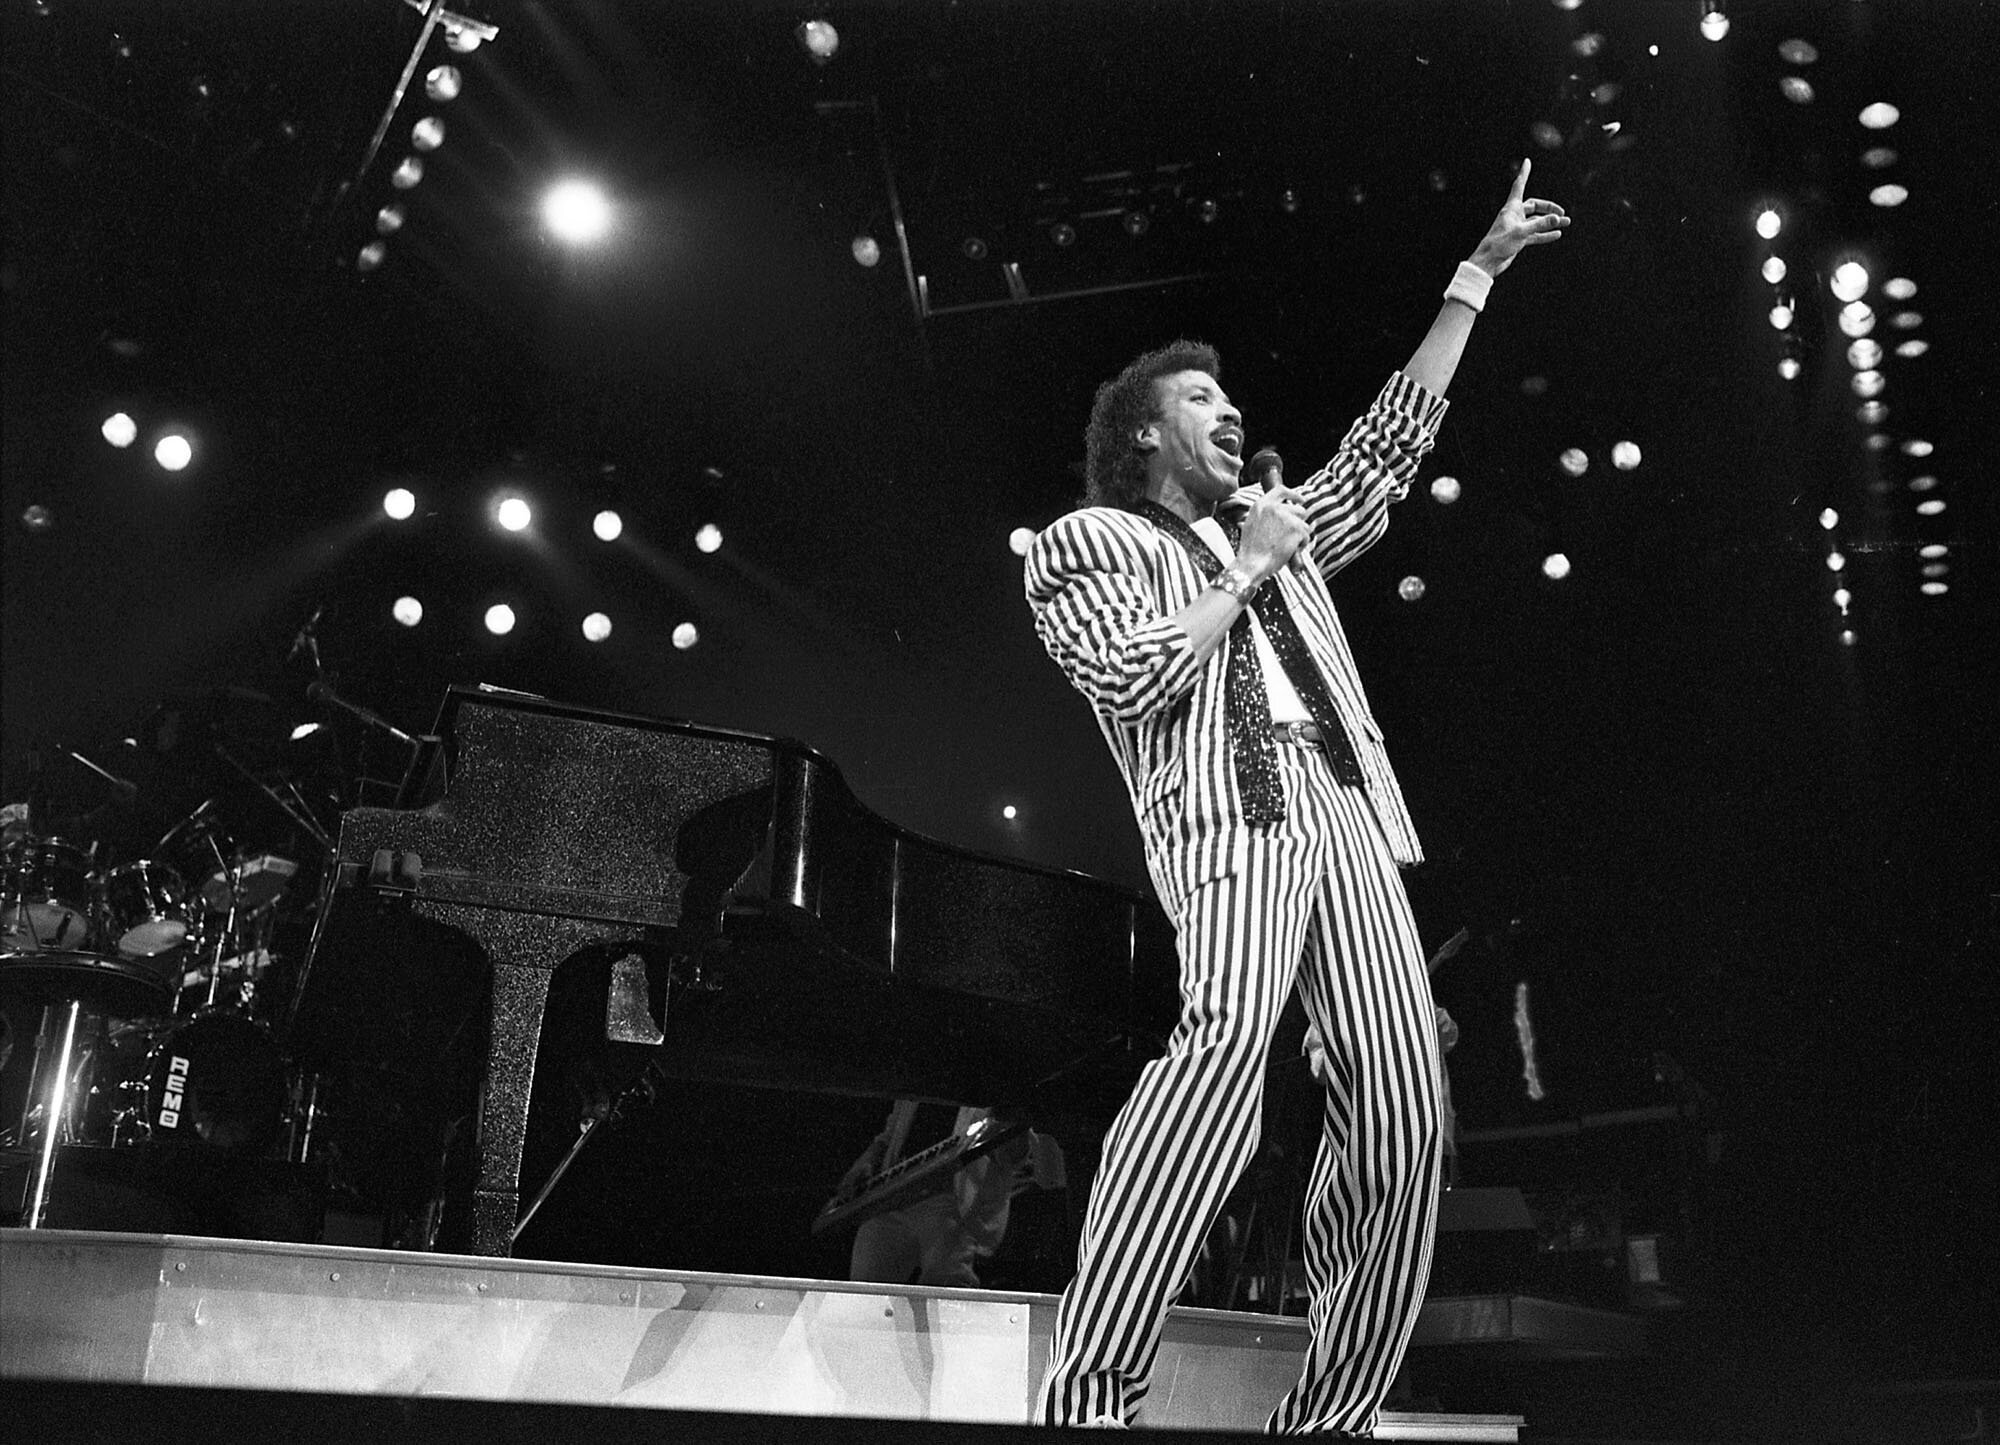  Dec. 9, 1986: Lionel Richie in concert at the Forum in Inglewood. Photo: Marsha Traeger-Gorman 